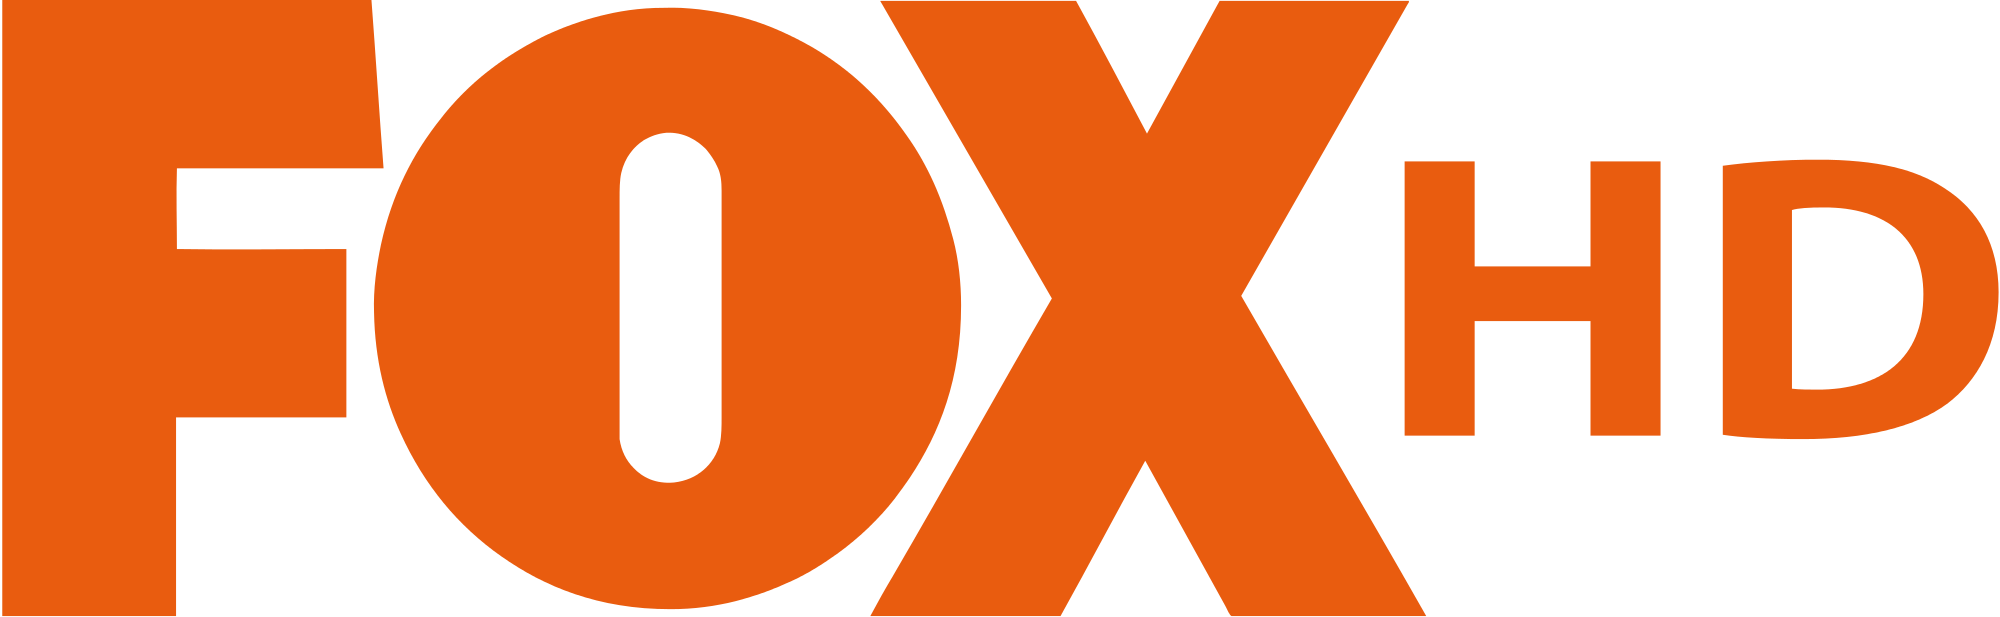 Https fox com. Телеканал Фокс. Логотип. Fox лого Телеканал.